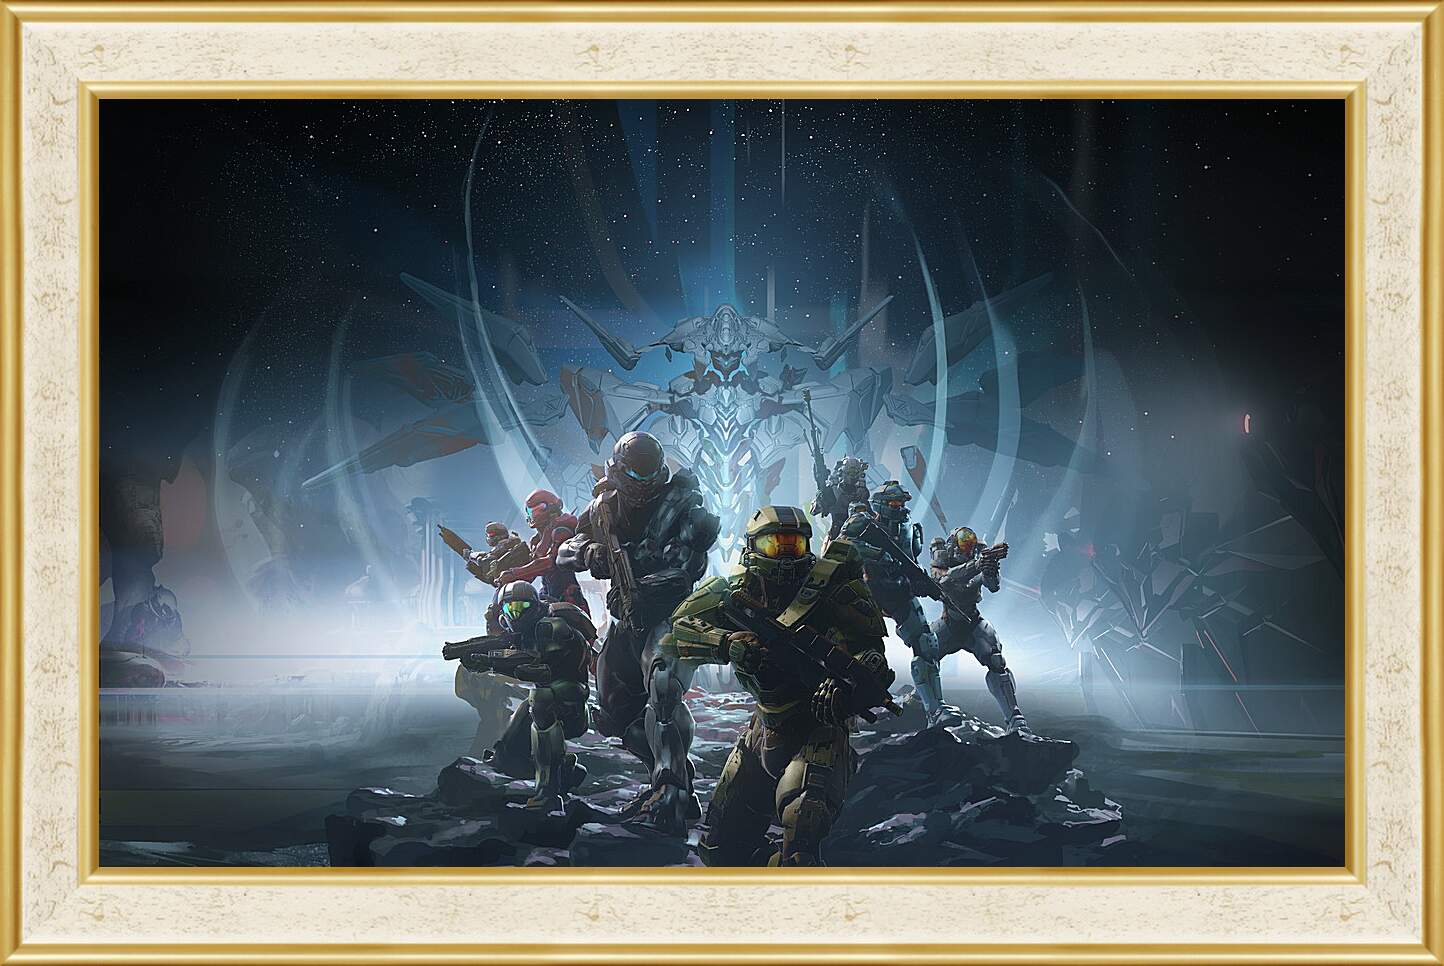 Картина в раме - Halo 5: Guardians